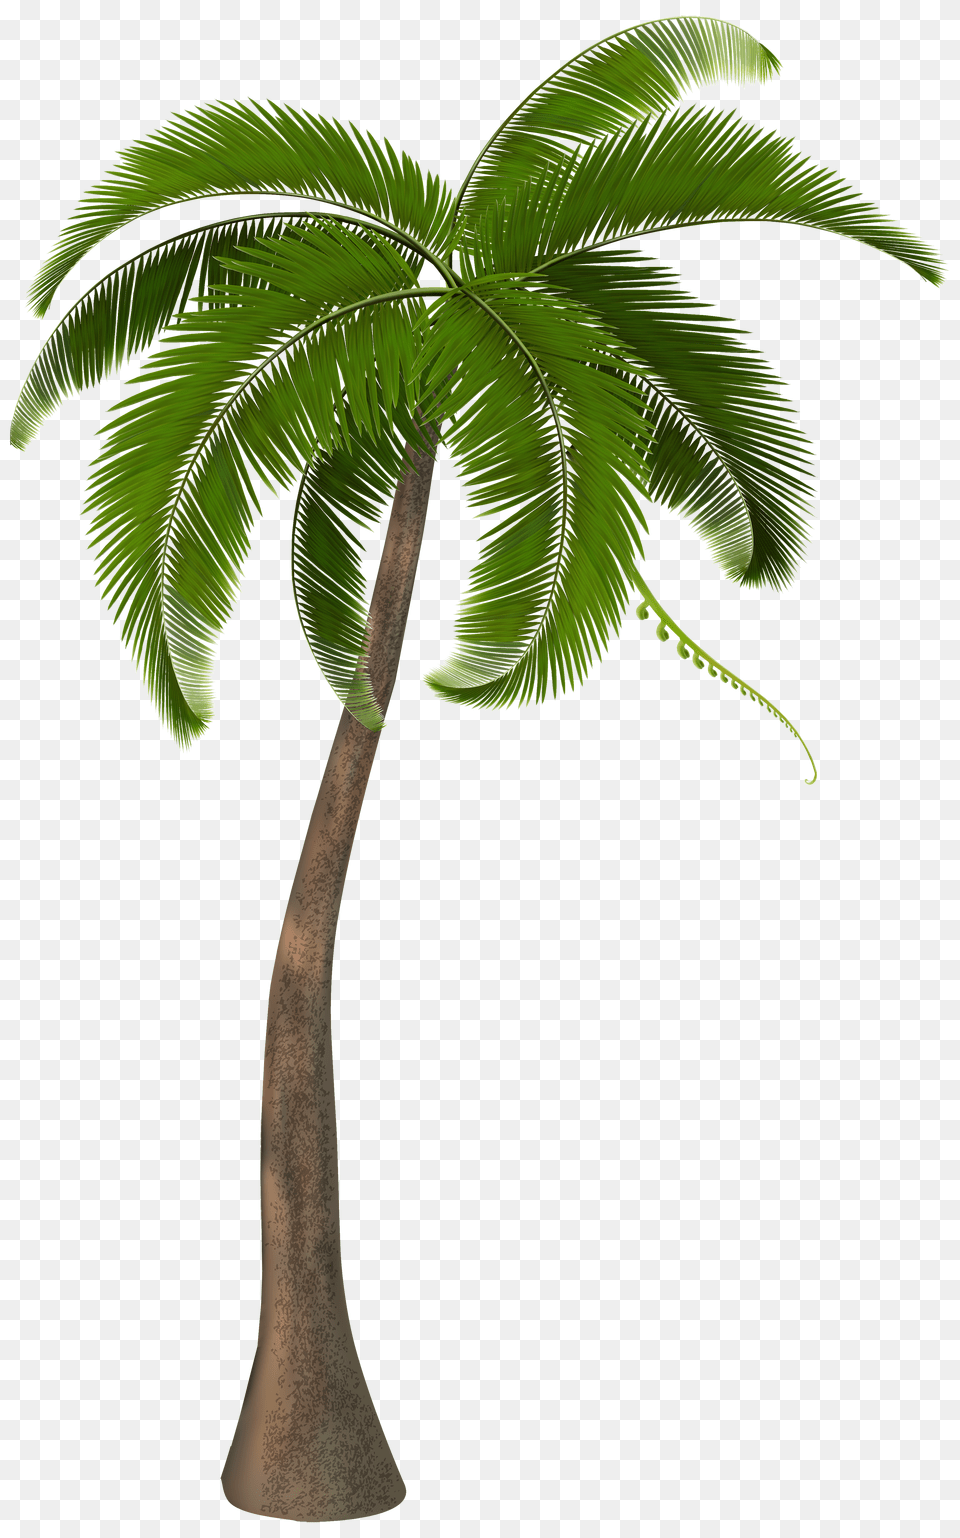 Palm Tree, Coal, Transportation, Vehicle, Railway Png Image